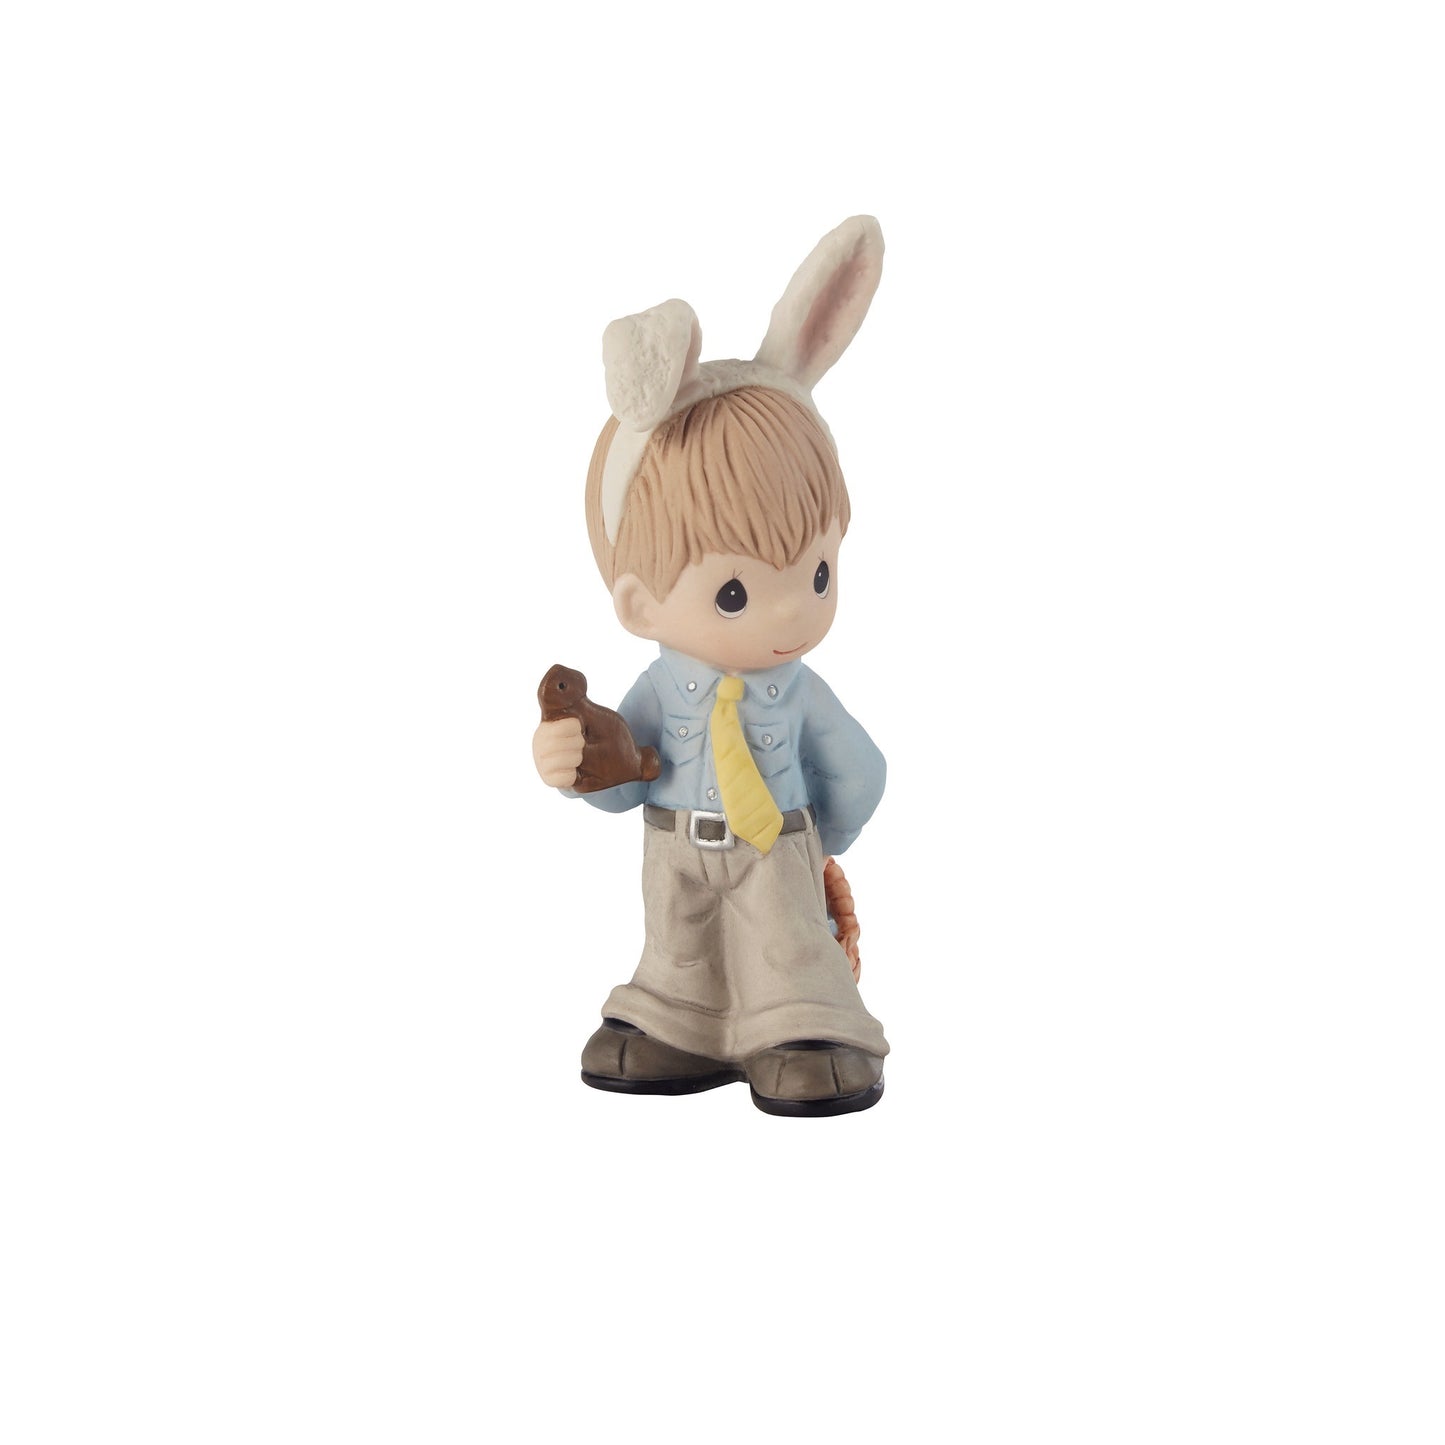 Precious Moments "Wishing You A Hoppy Easter" Boy Figurine